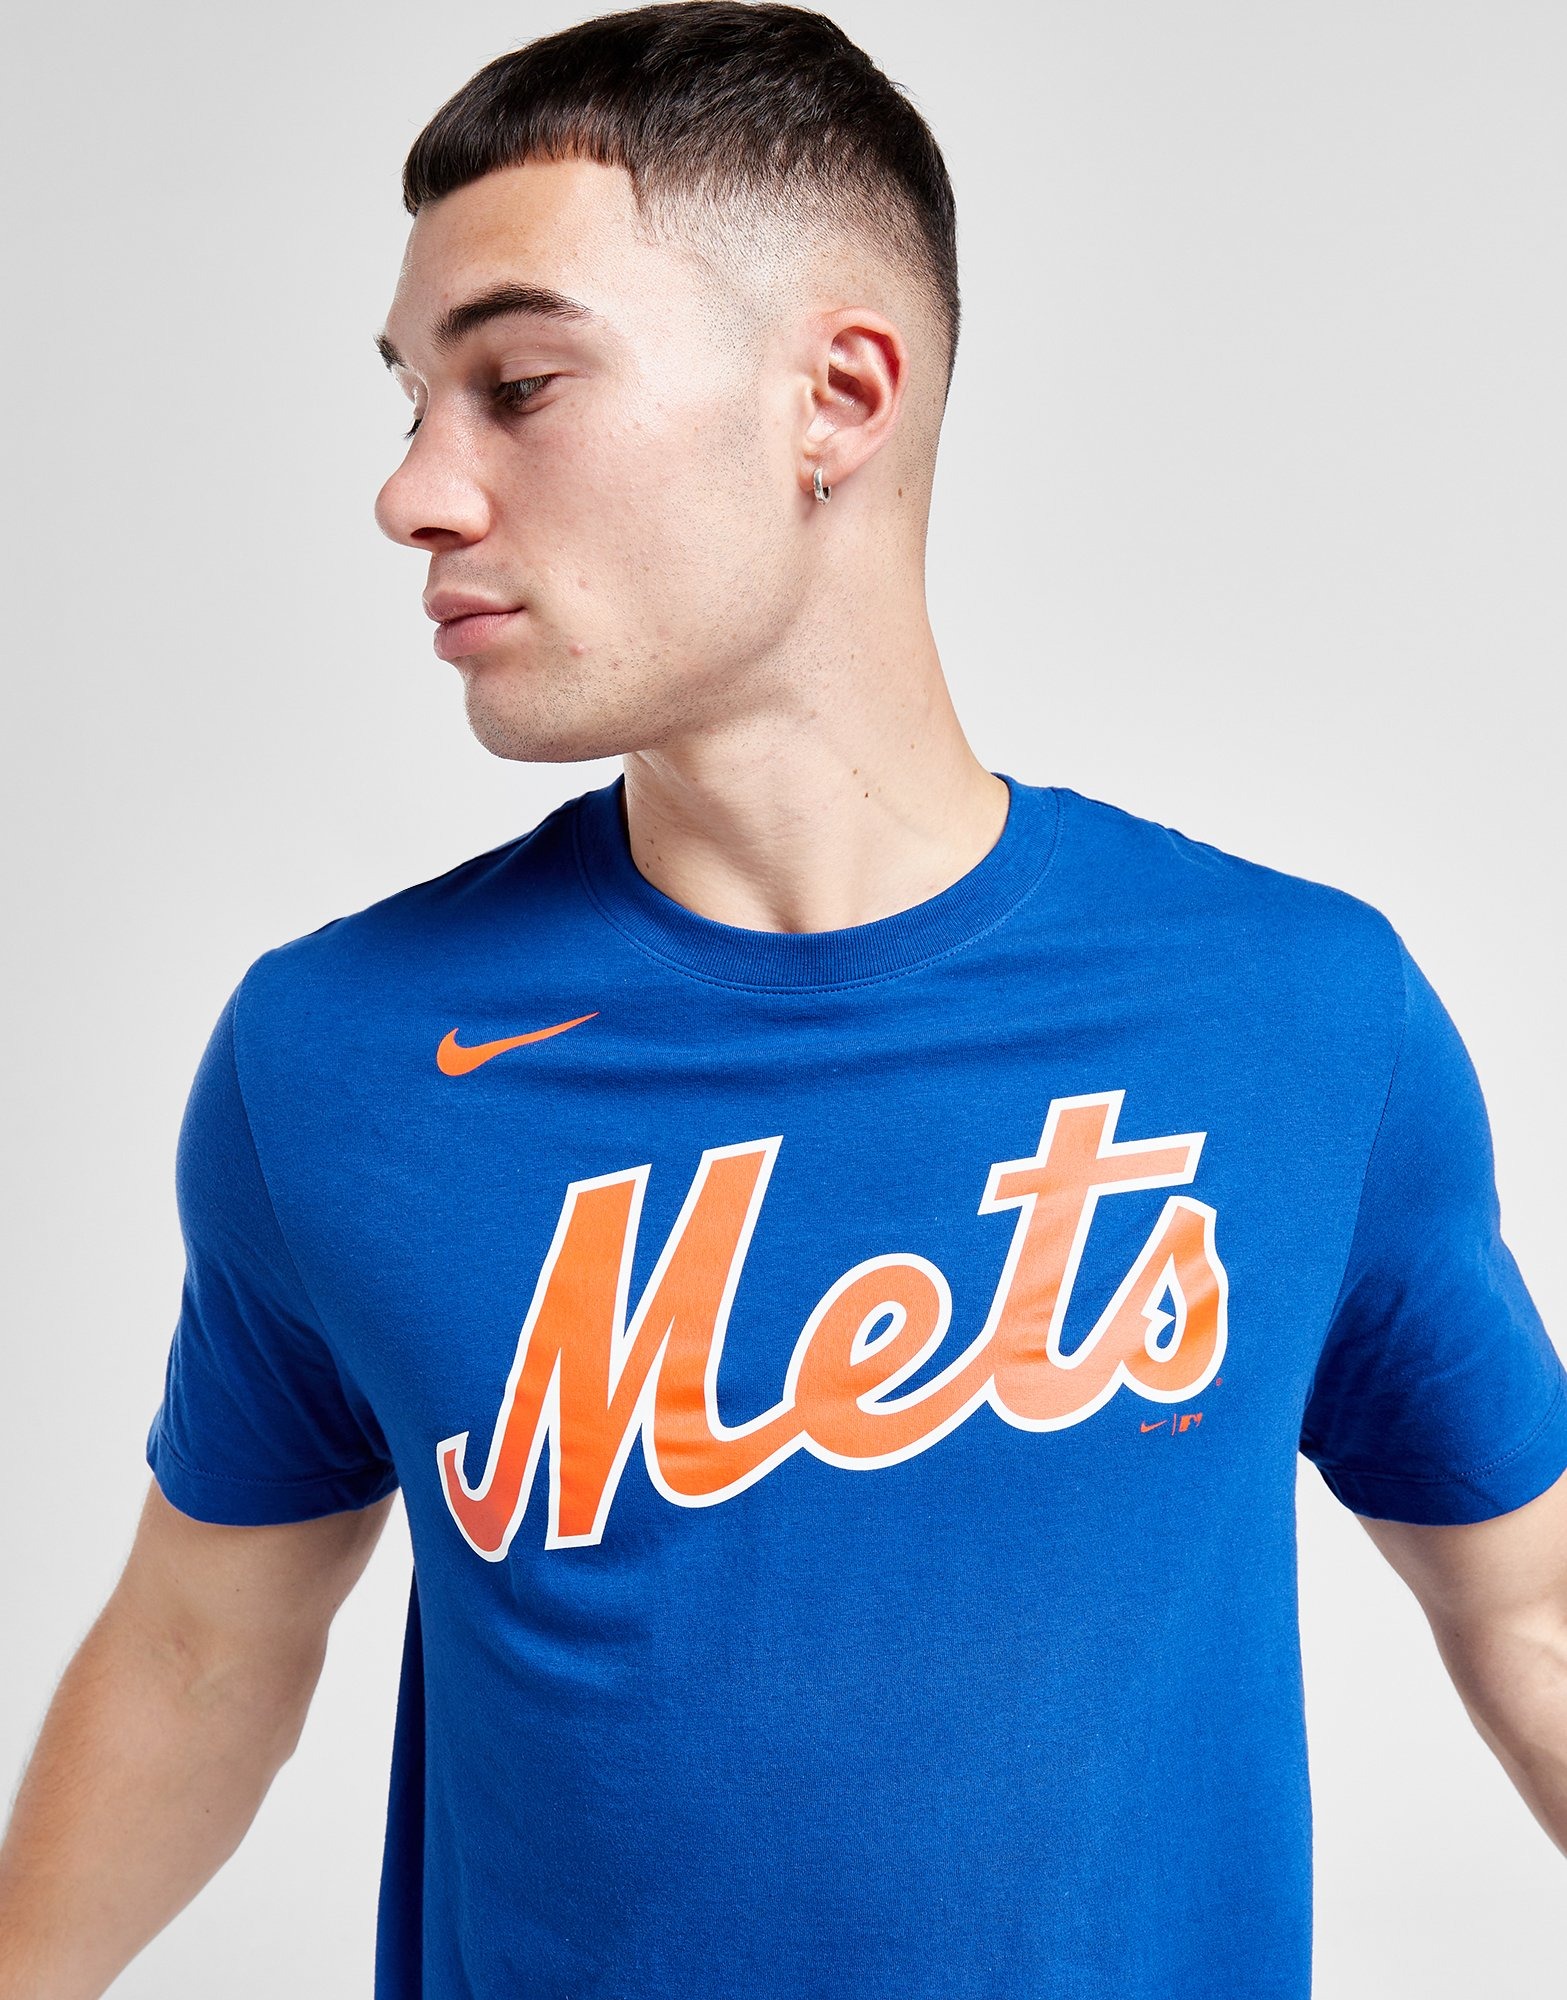 New York Mets Home/Away Men's Sport Cut Jersey SM